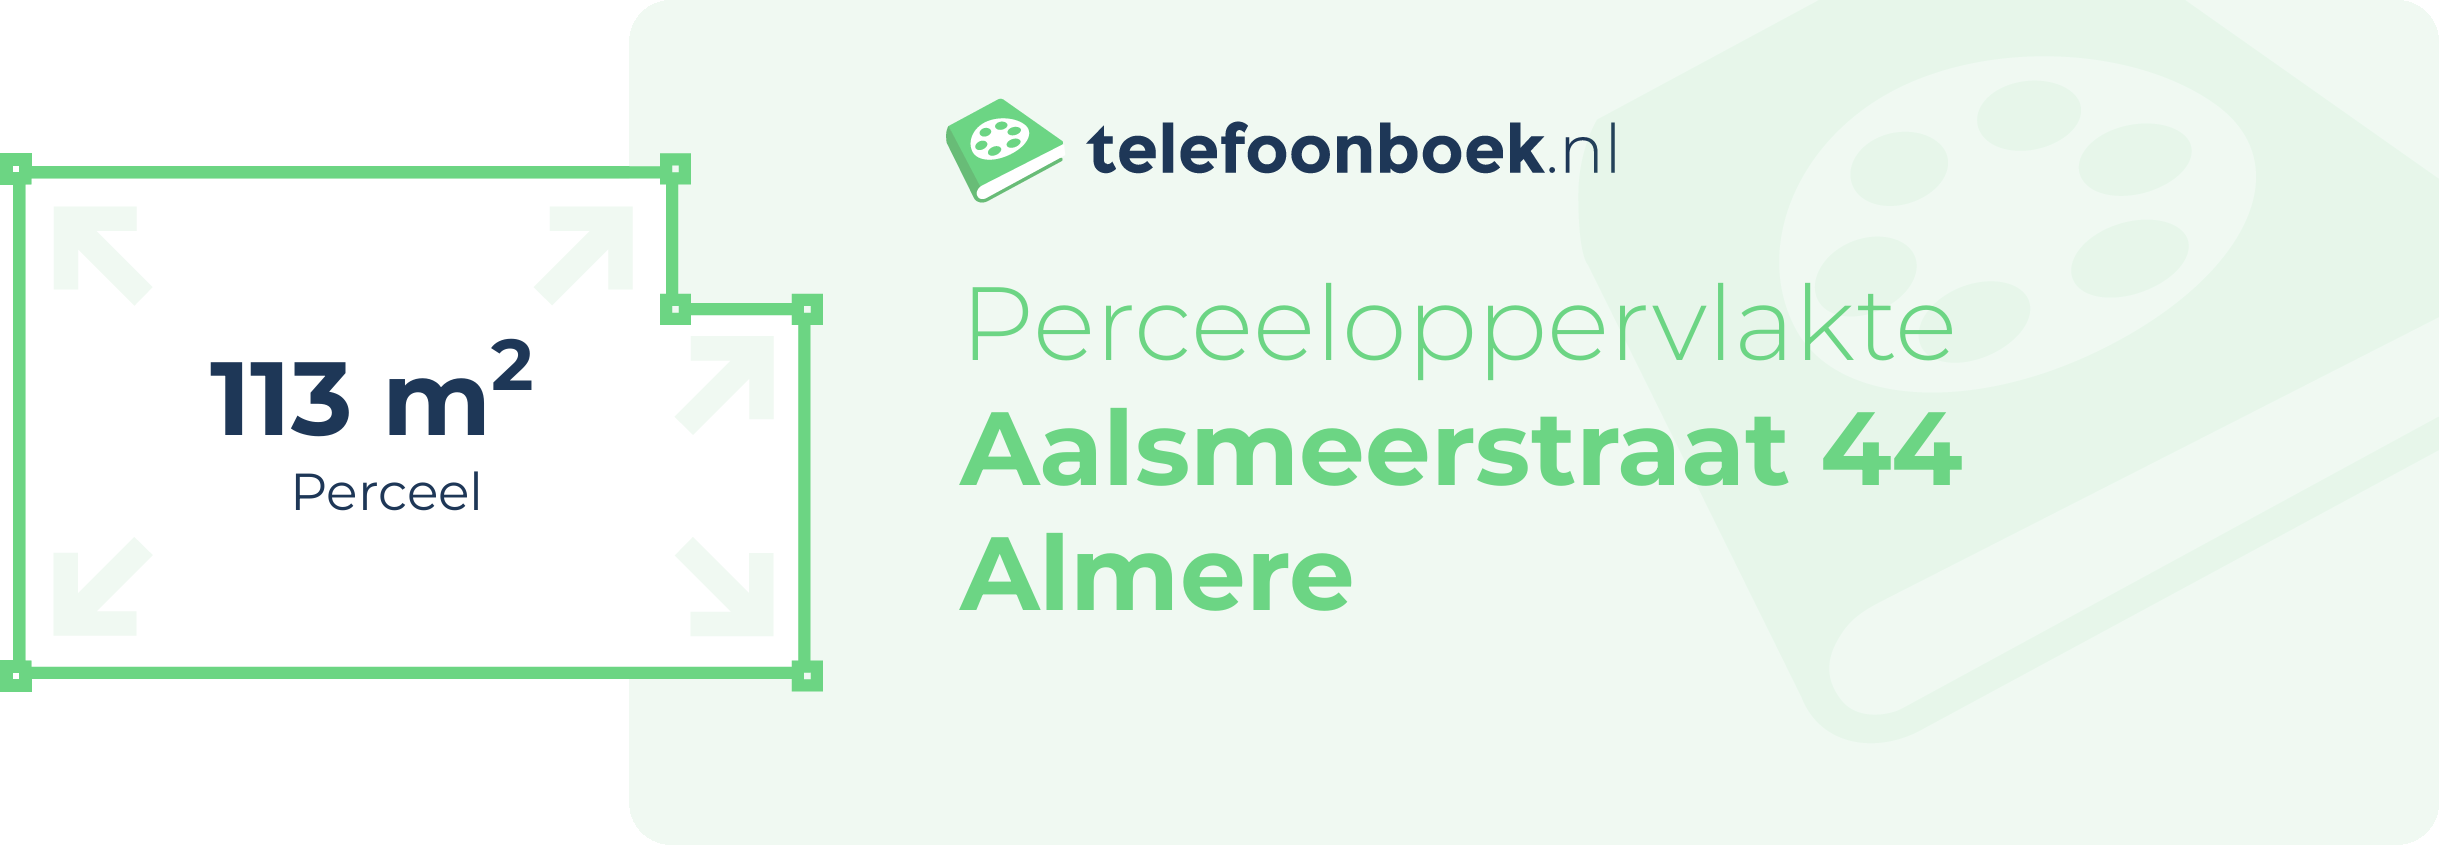 Perceeloppervlakte Aalsmeerstraat 44 Almere